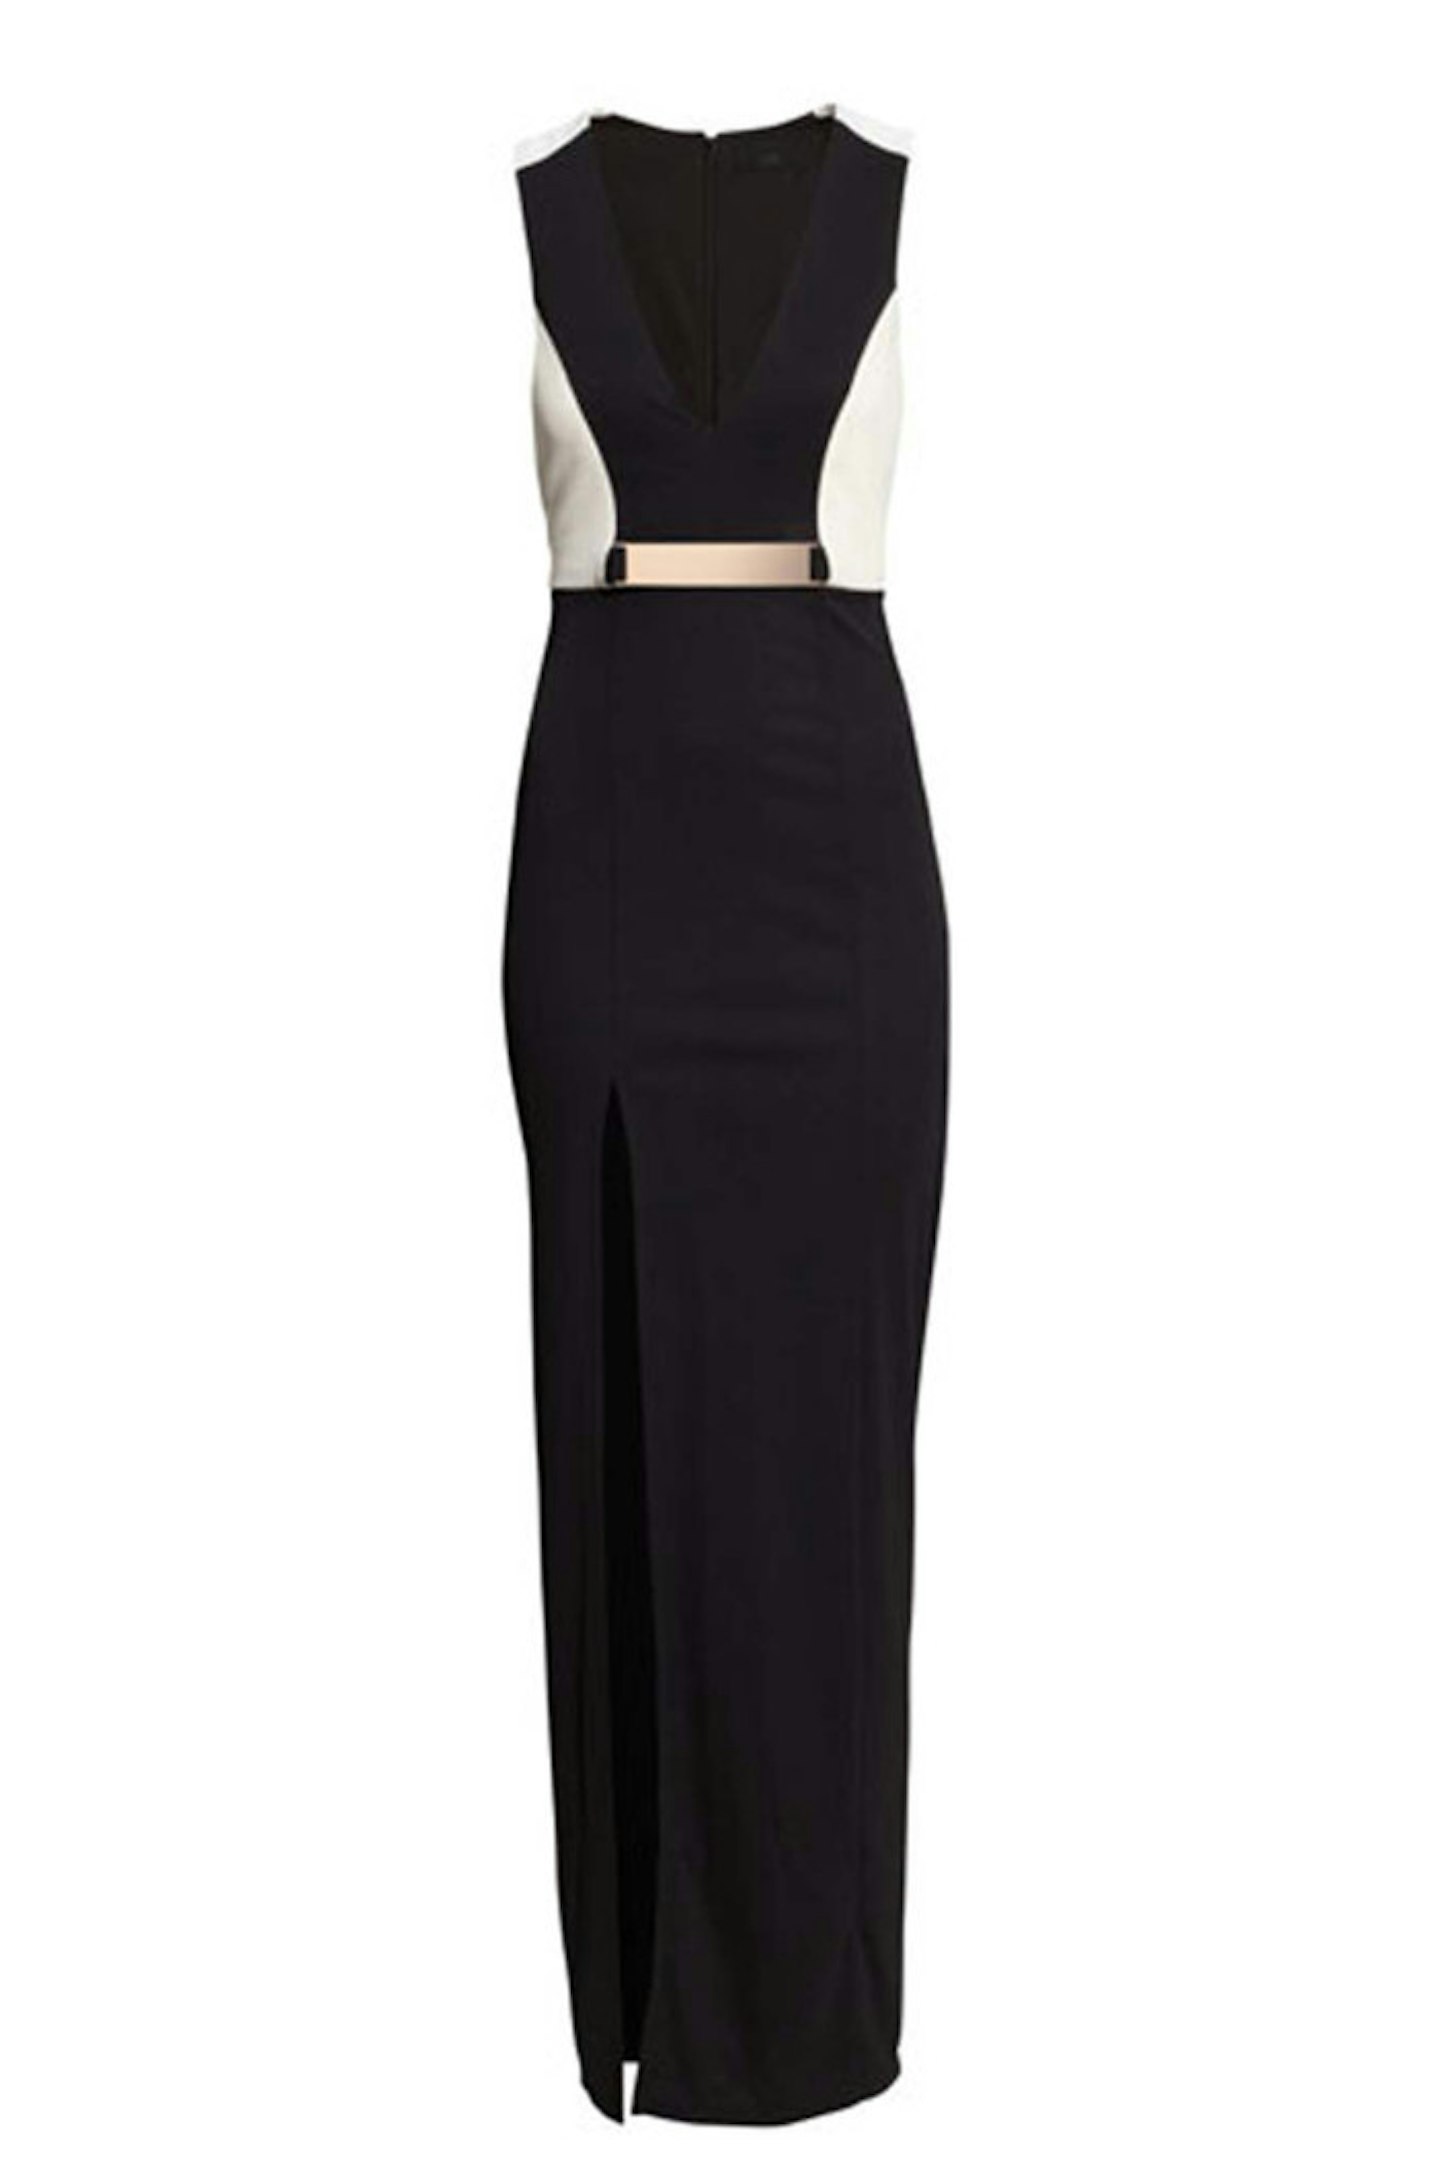 Long black dress with gold belt, cream panelling and side split detail, £29.99, H&M